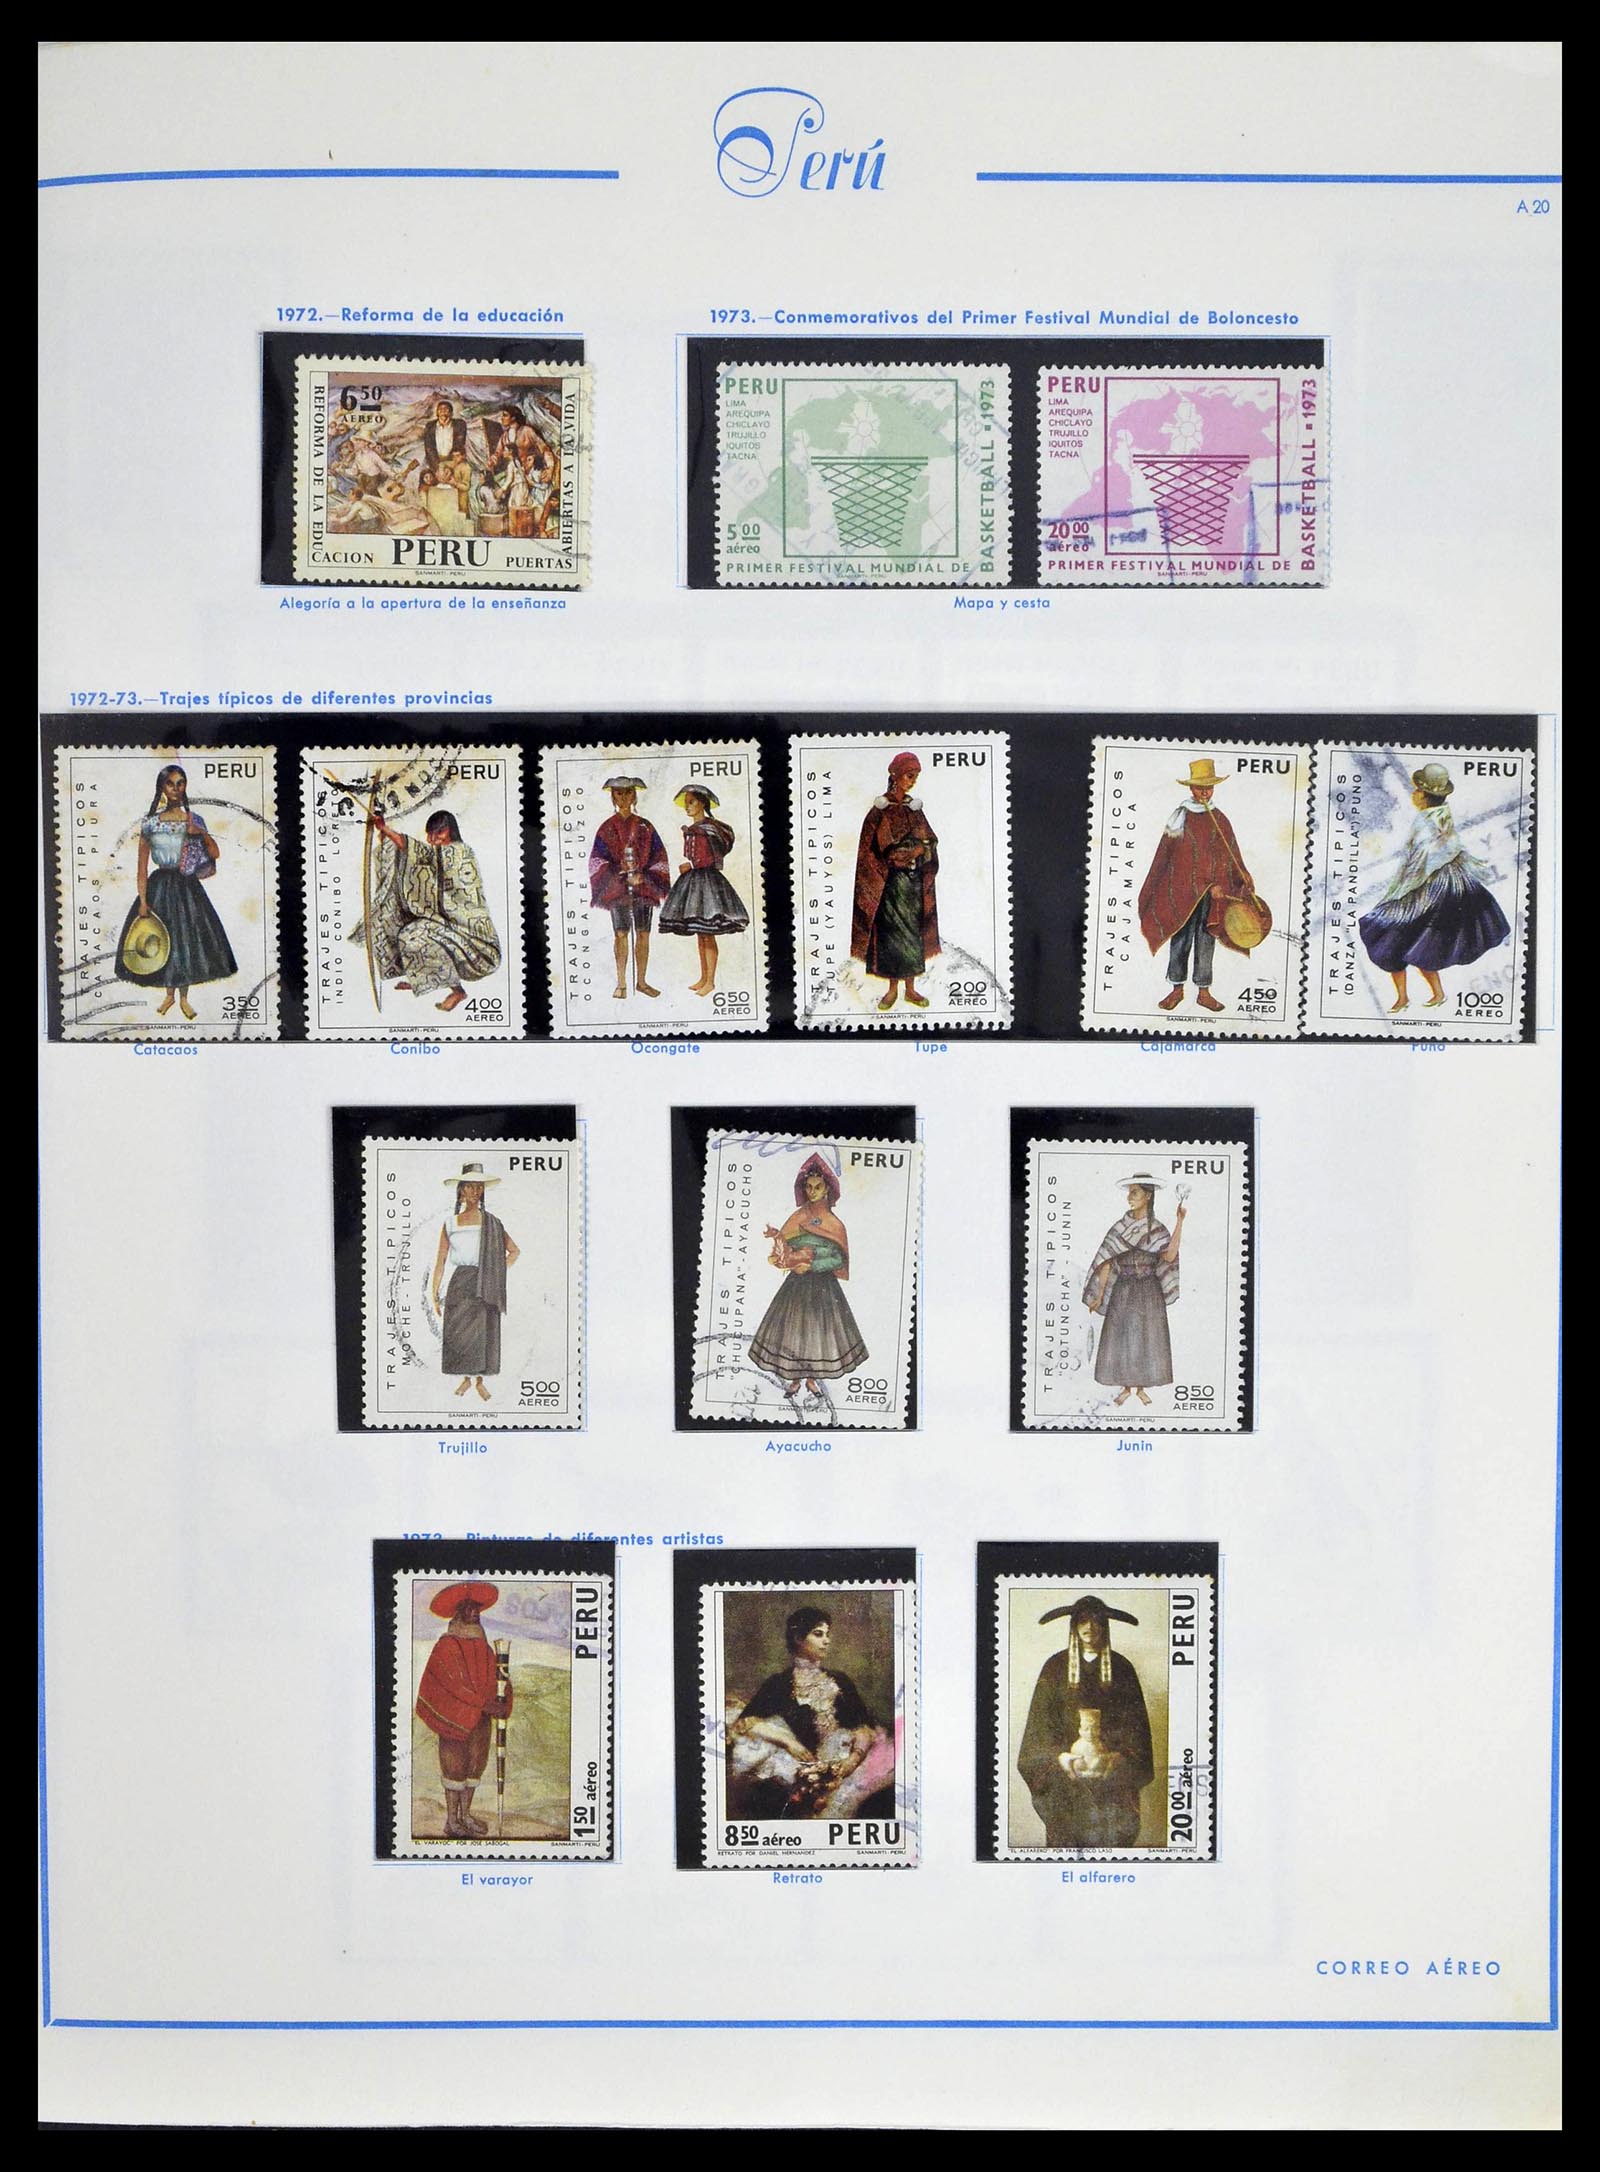 39214 0072 - Stamp collection 39214 Peru 1857-1981.